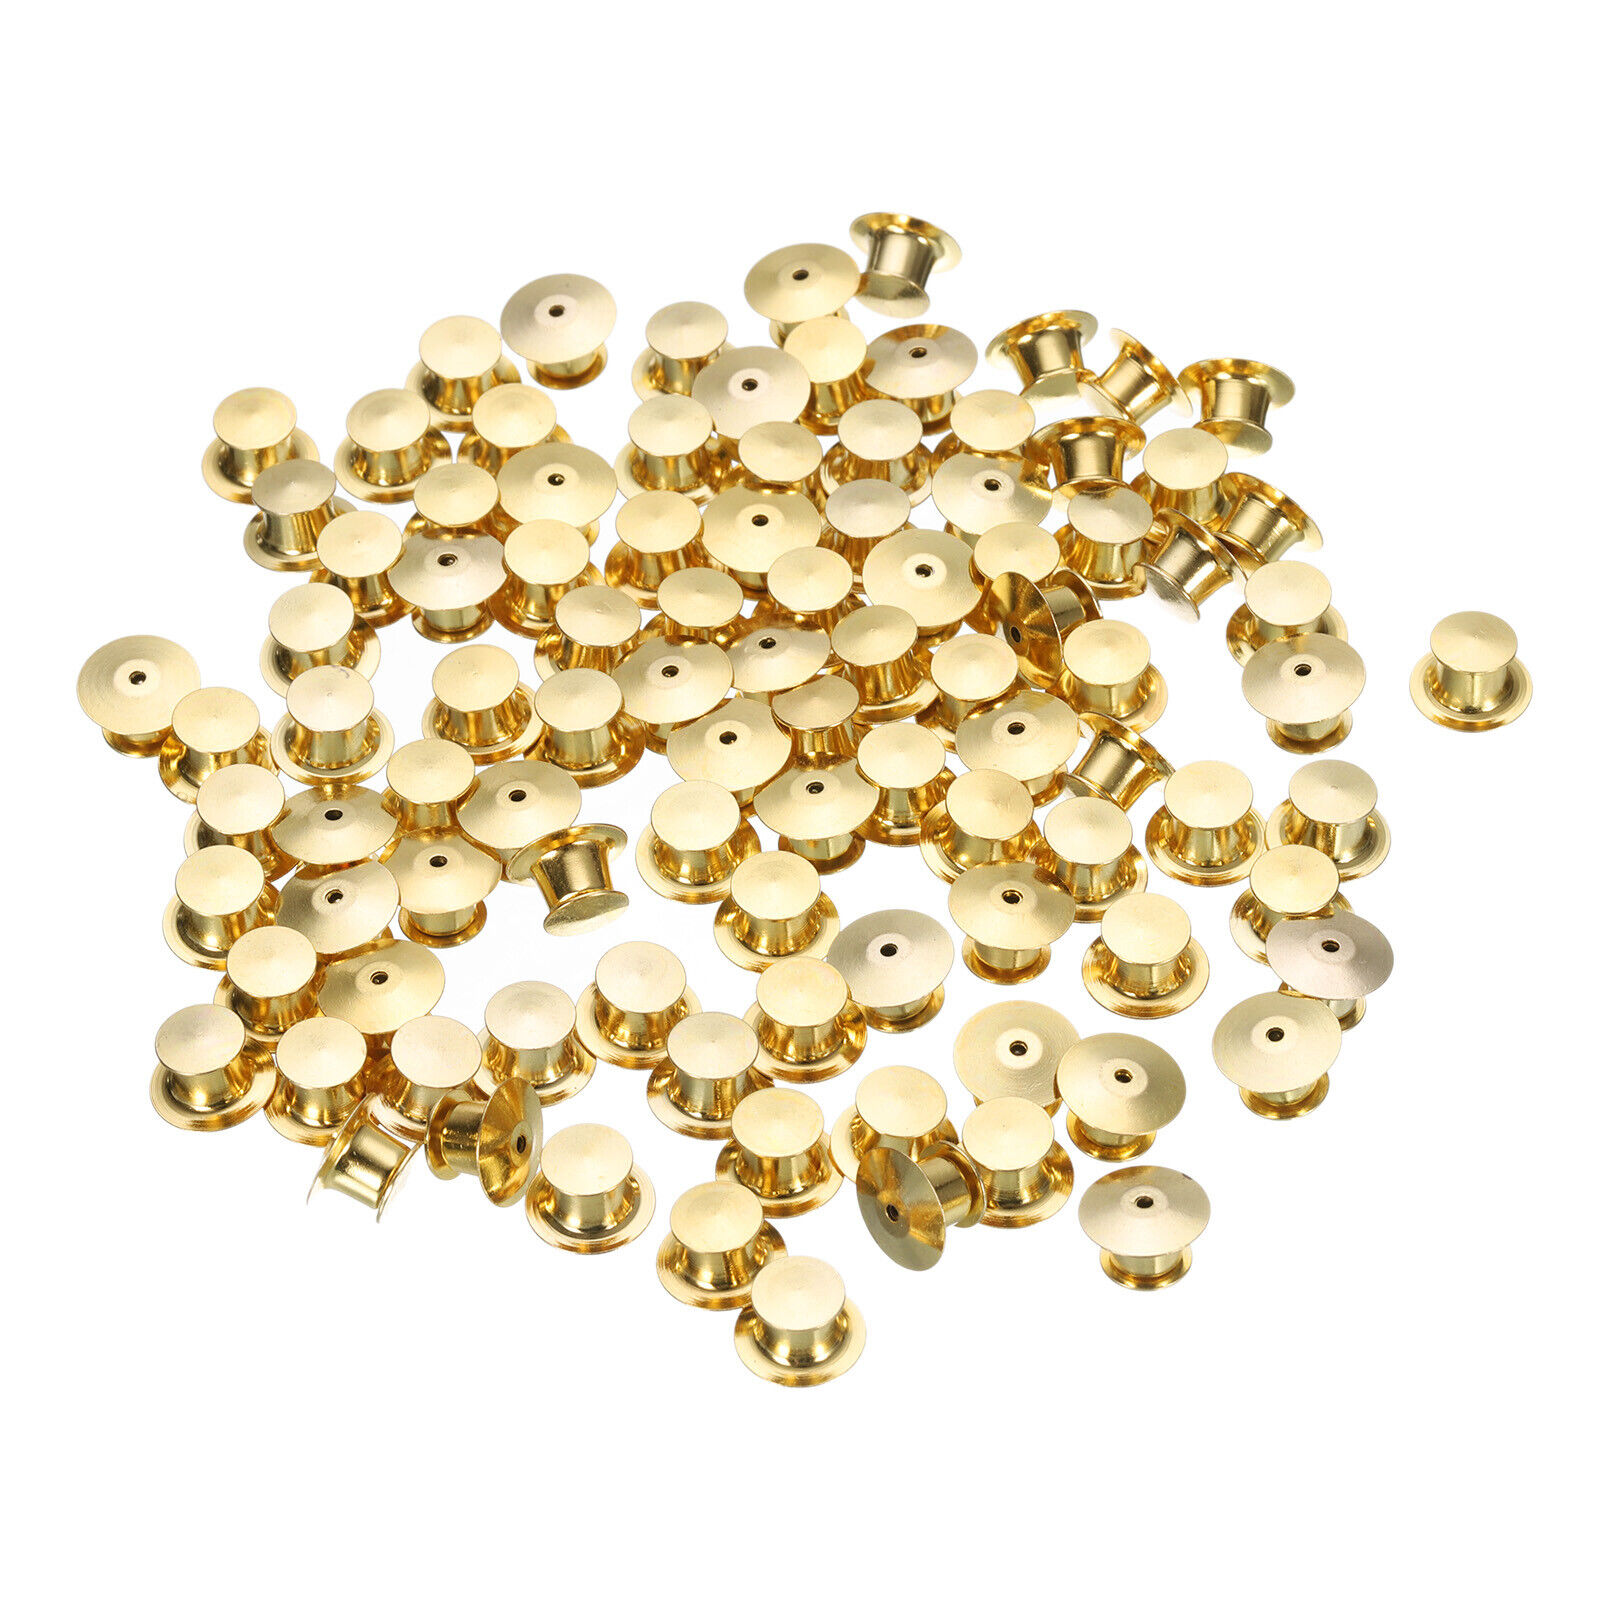 100pcs Metal Pin Backs Spring Loaded Pin keepers Locking Pin Keepers, Gold Tone